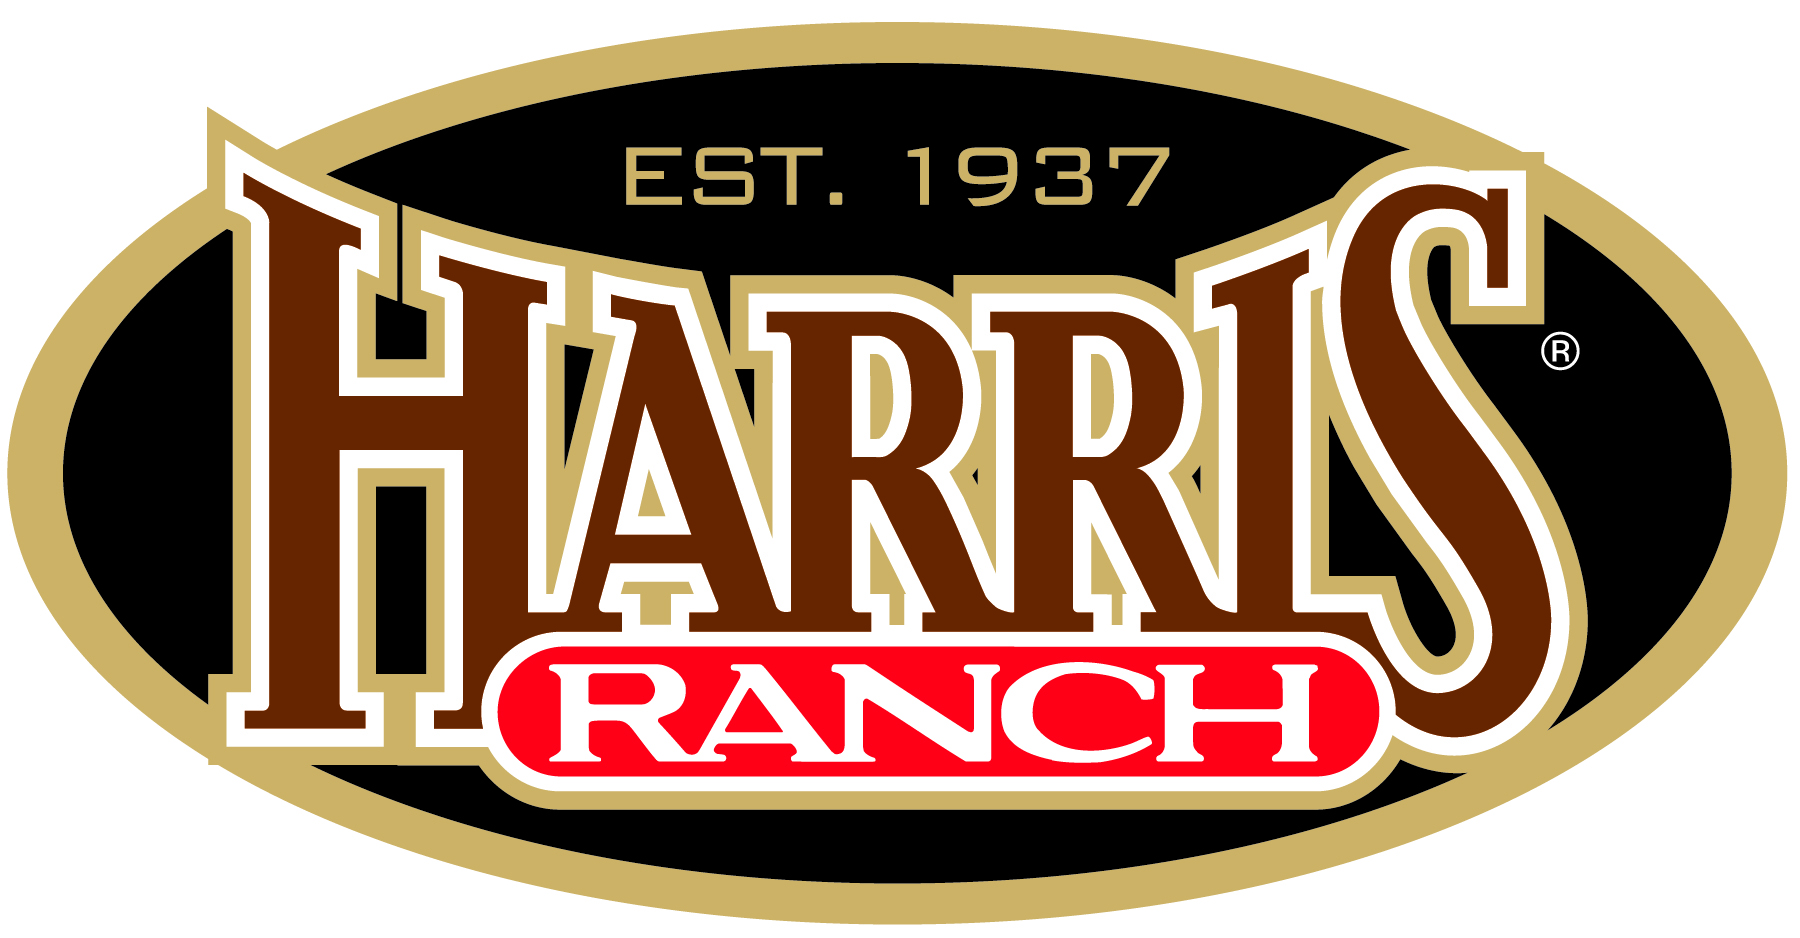 Harris Ranch